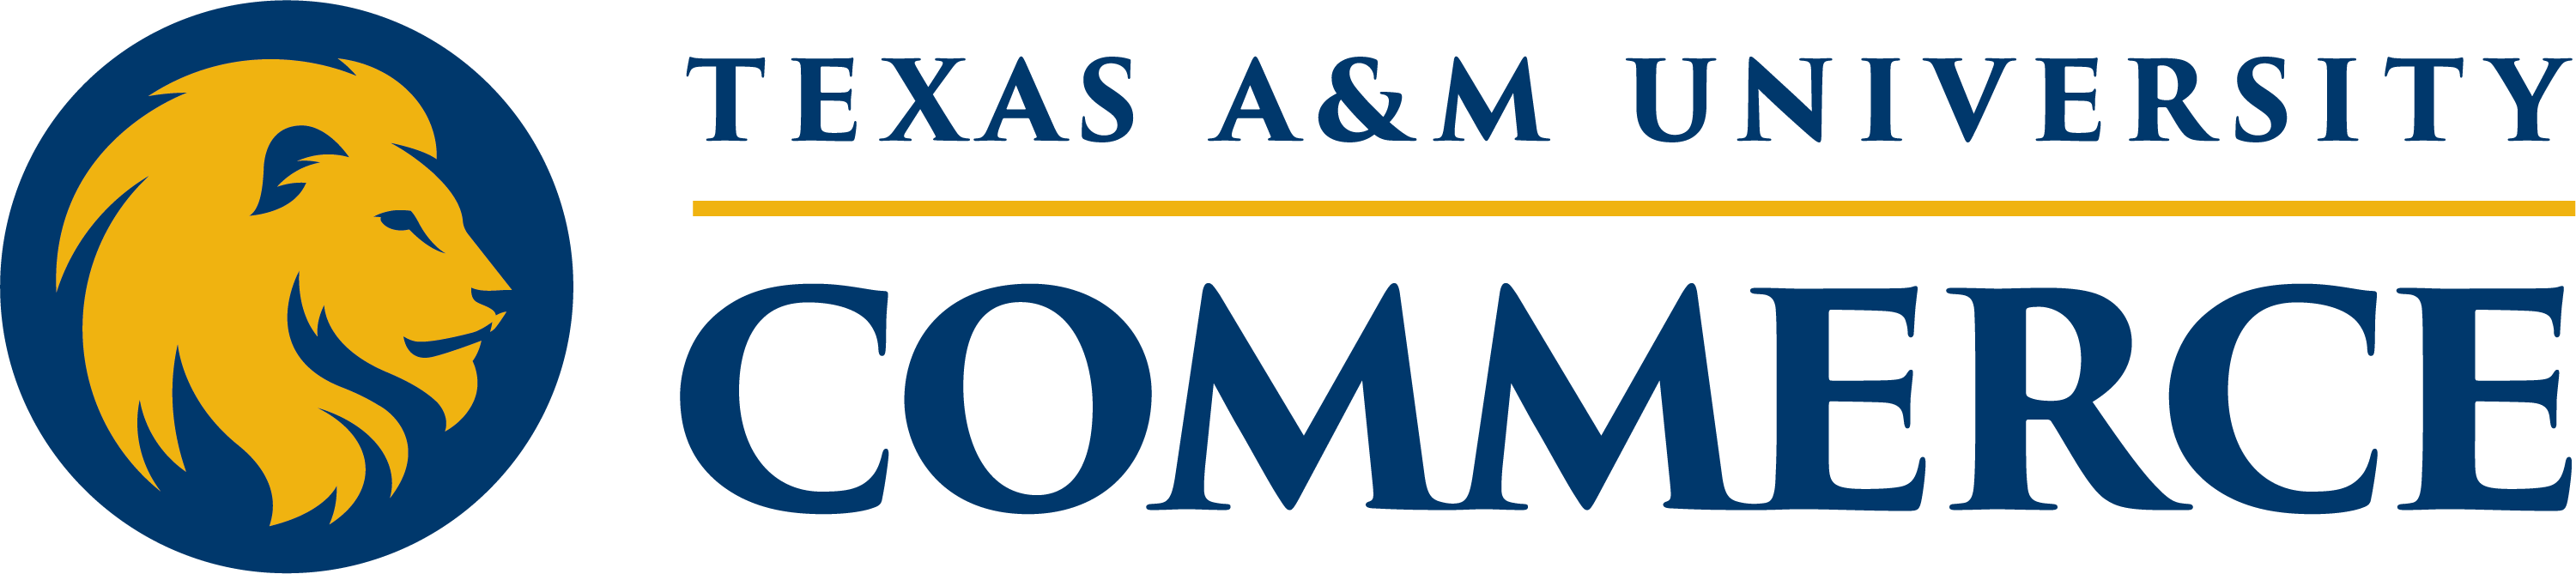 Image1 - Texas A&m University–commerce (3001x669)